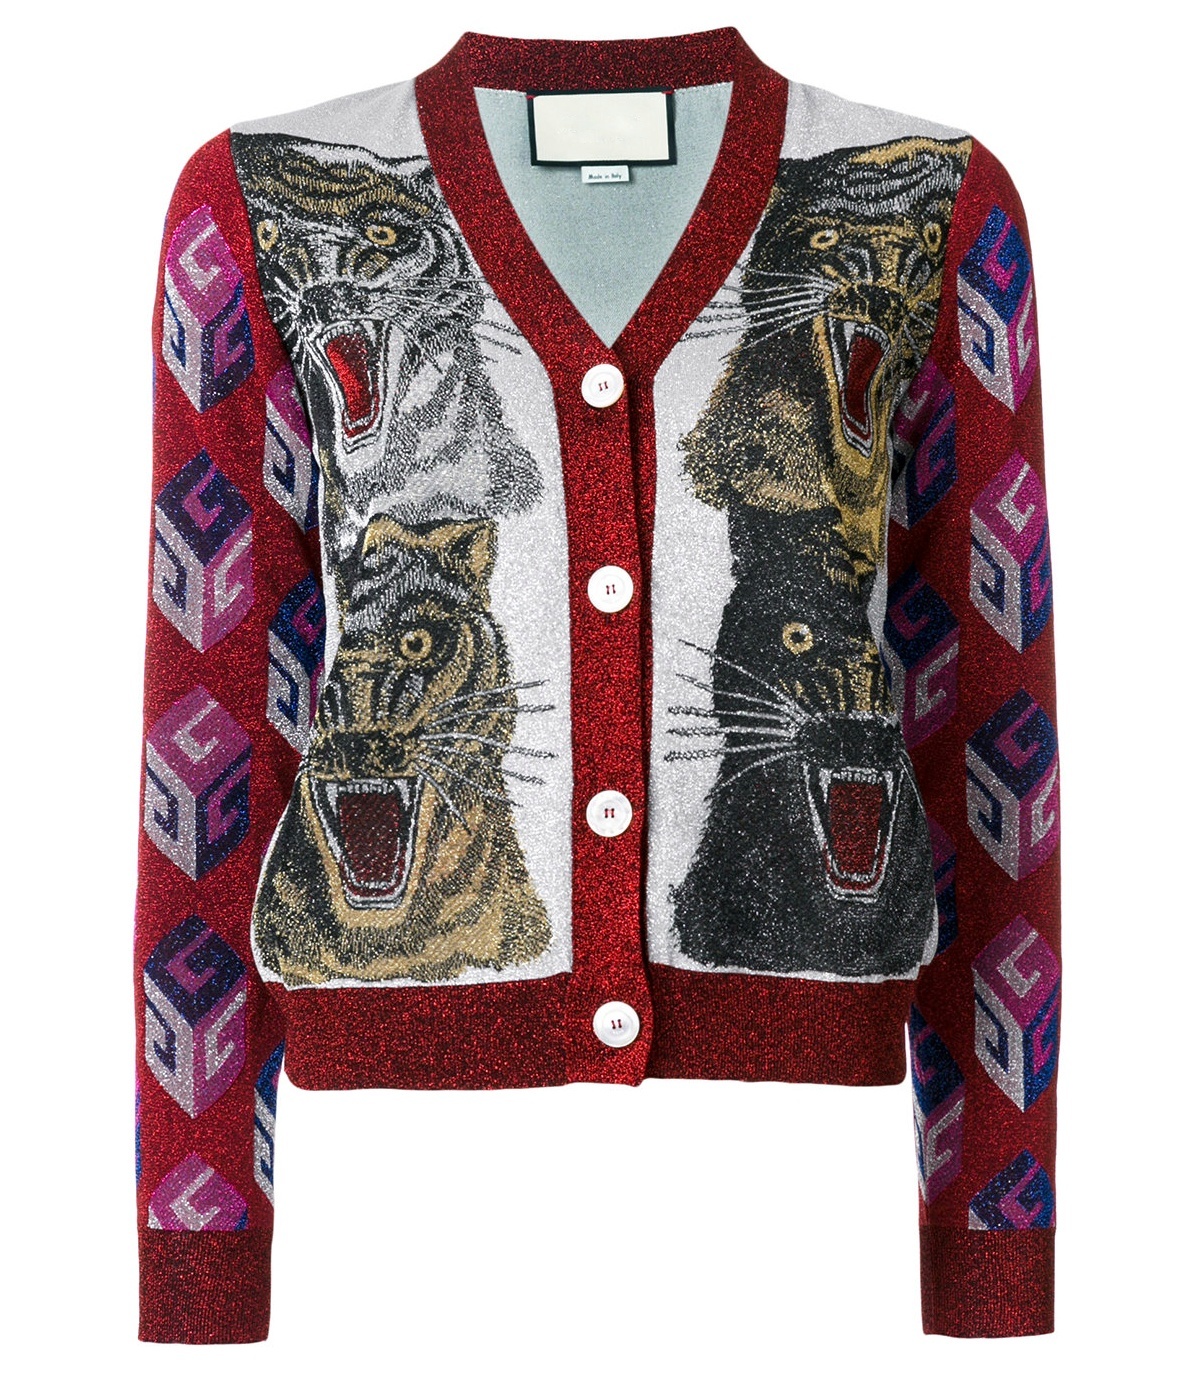 Indie Designs Tiger Intarsia Sweater – Indie Designs Clothing